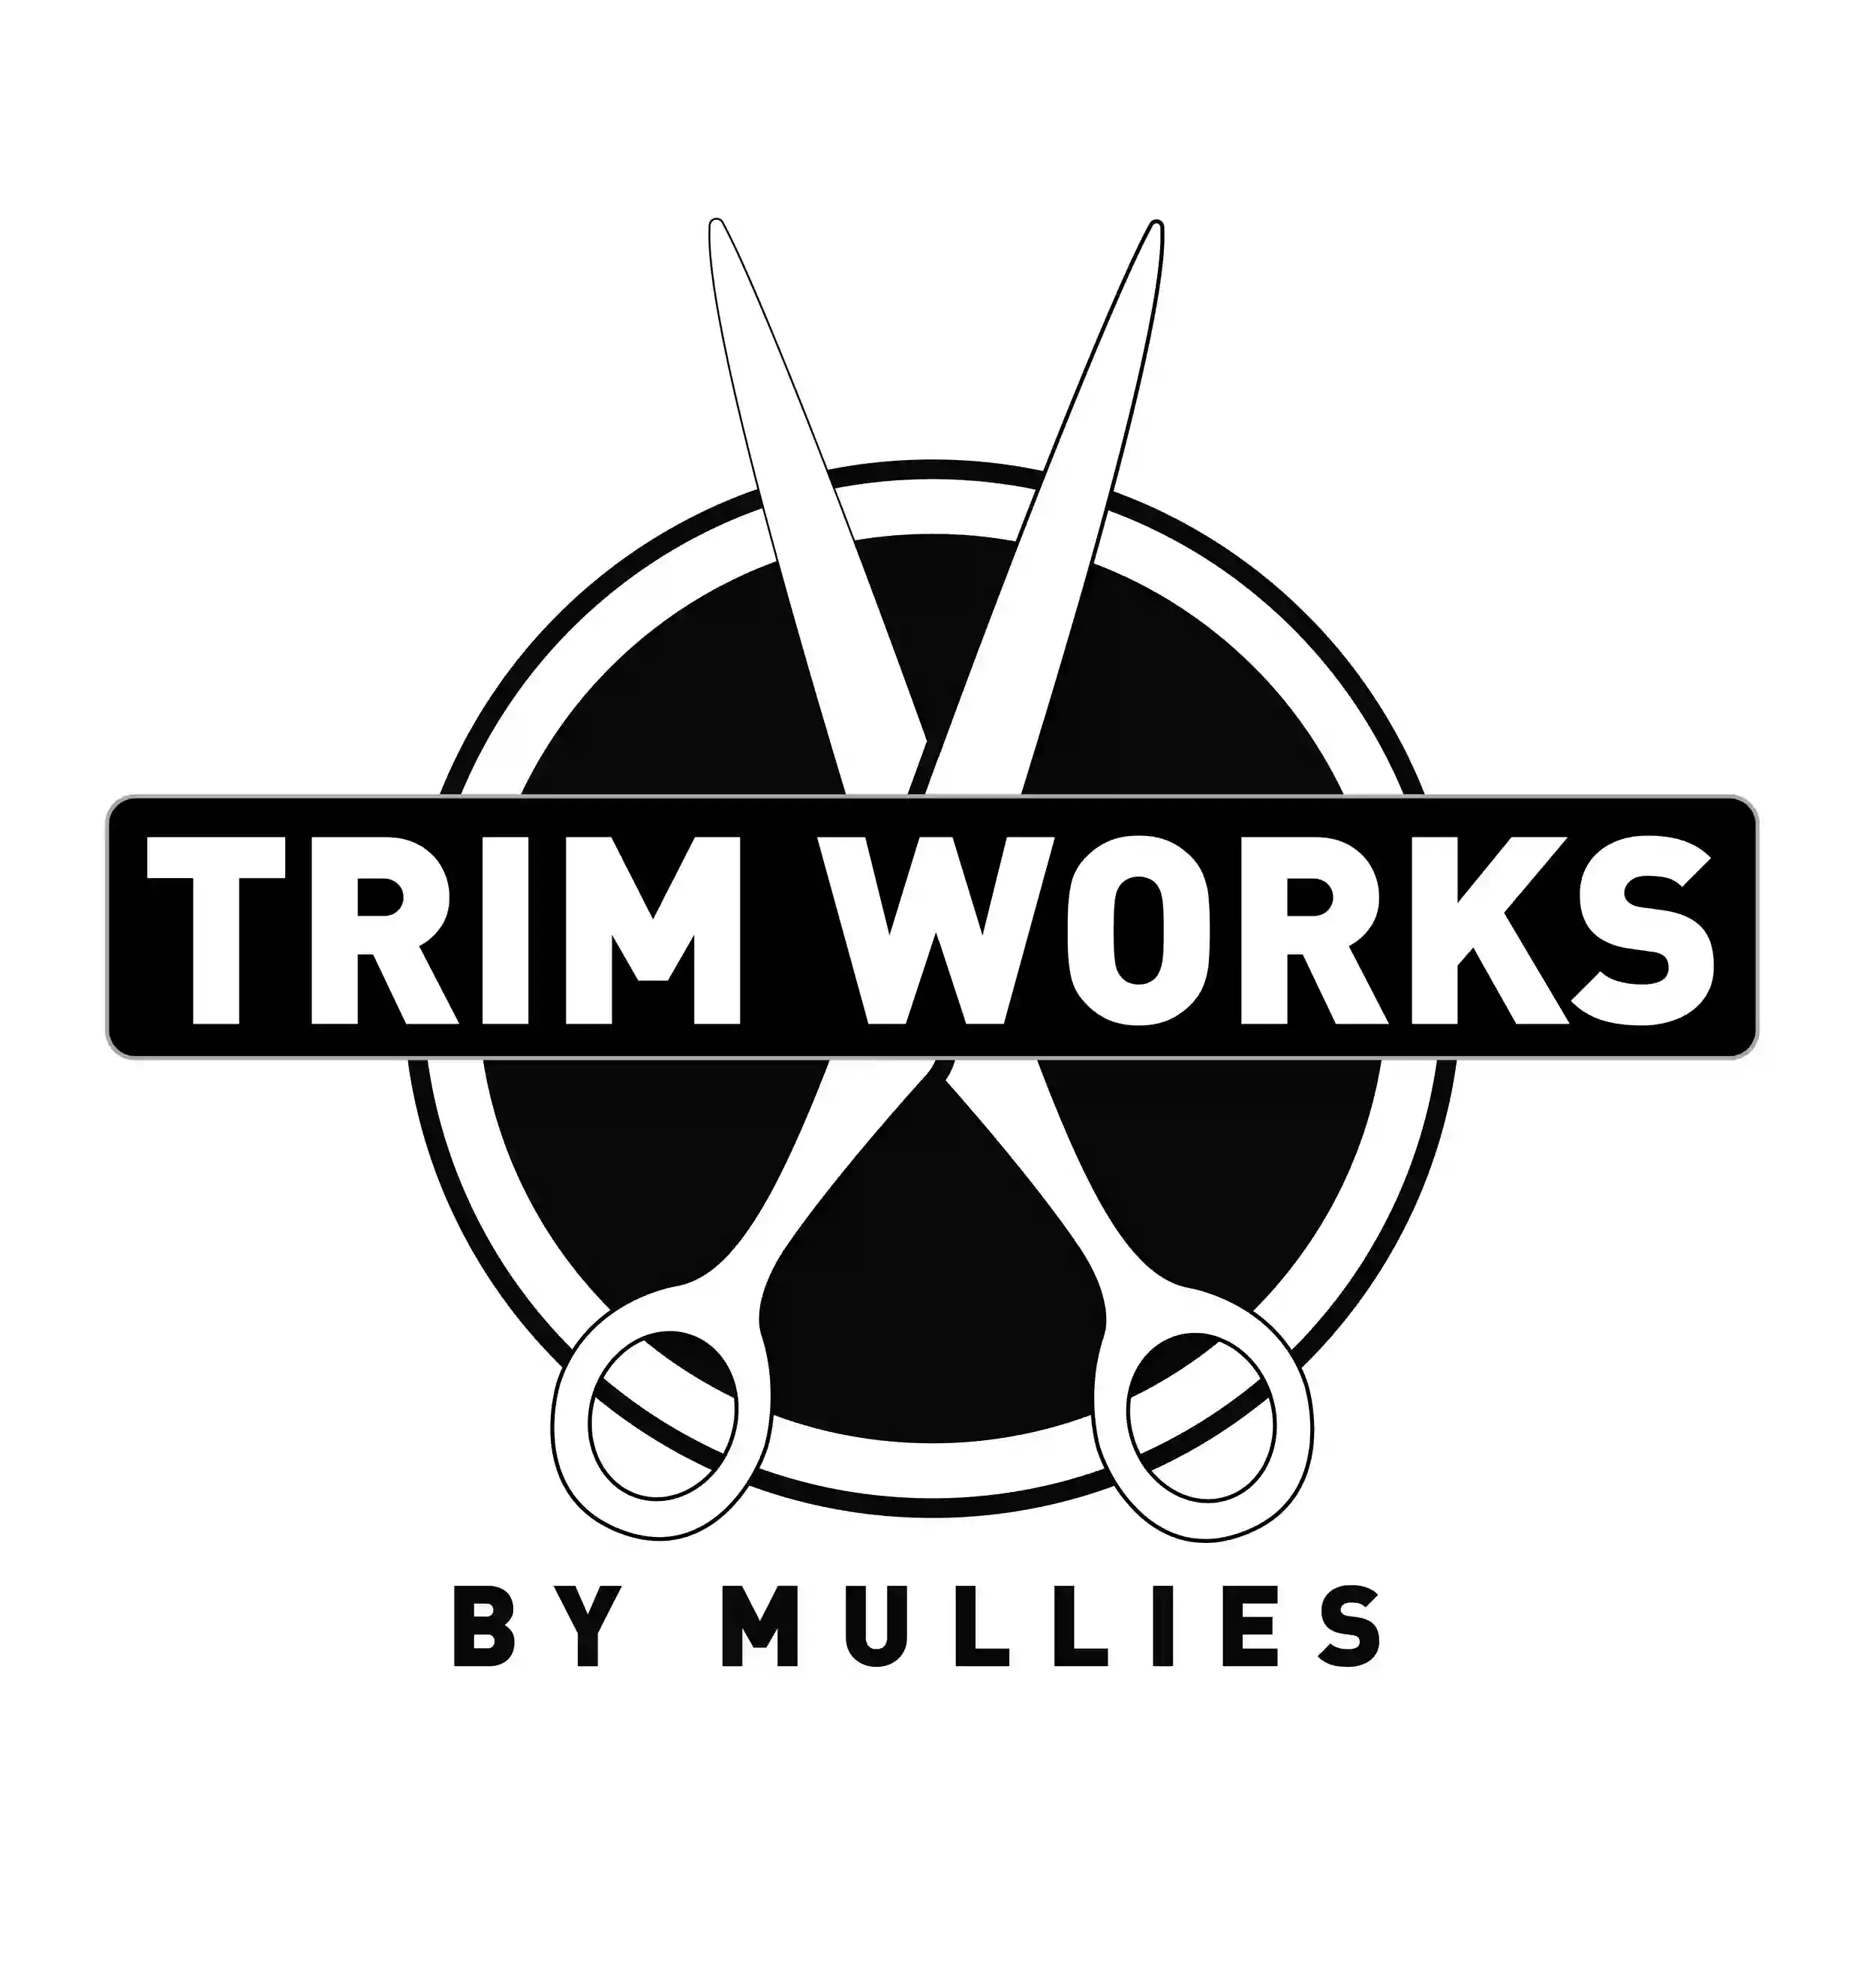 Trim Works by Mullies